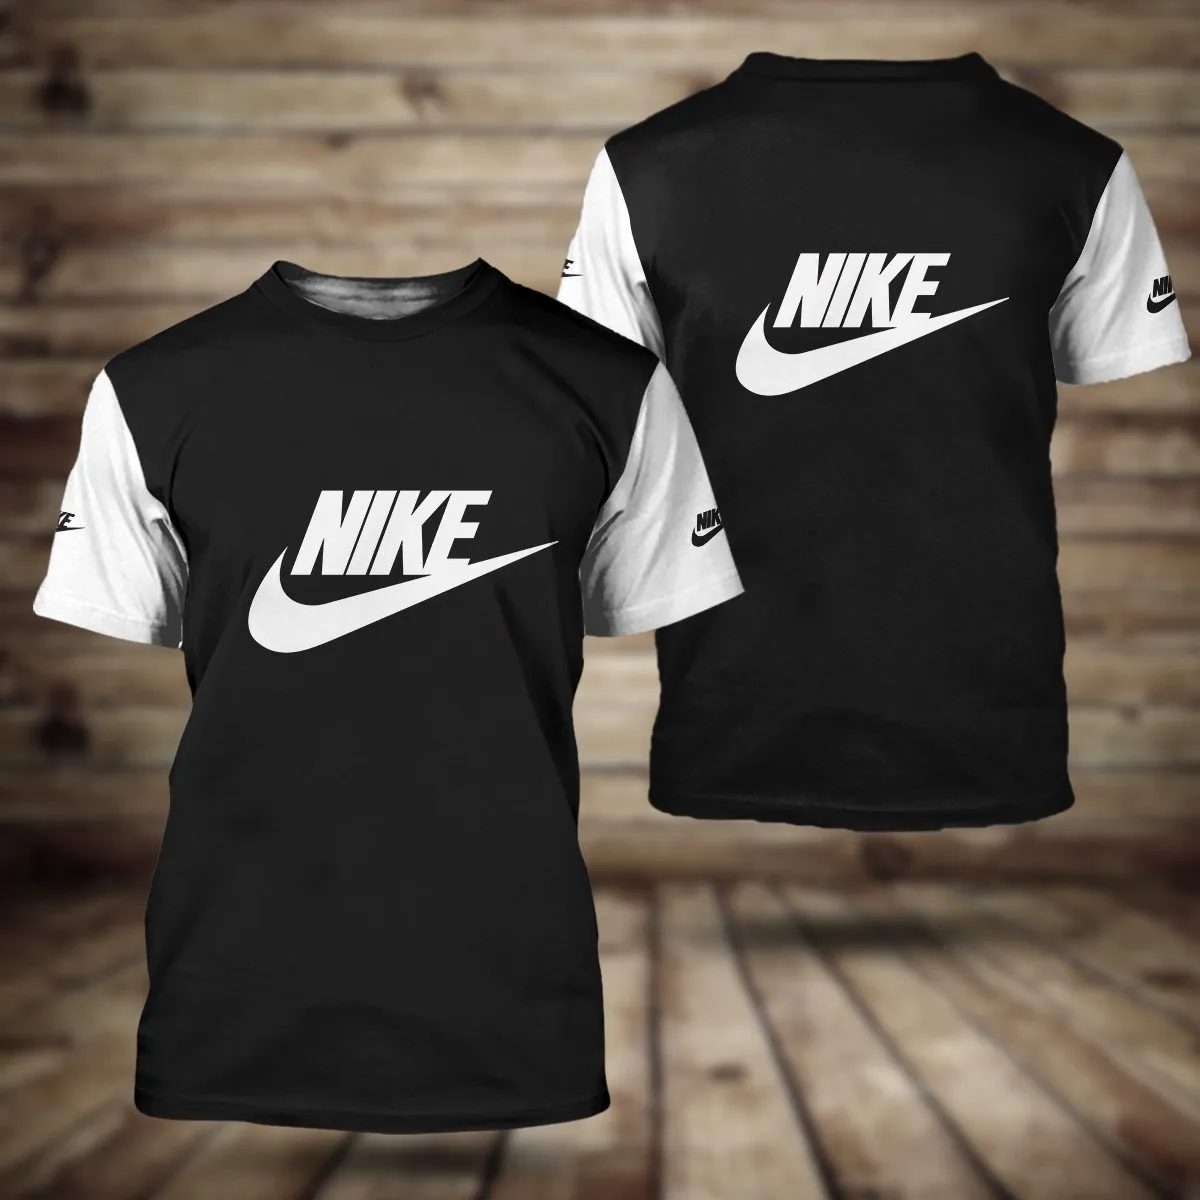 Nike Black White T Shirt Luxury Outfit Fashion